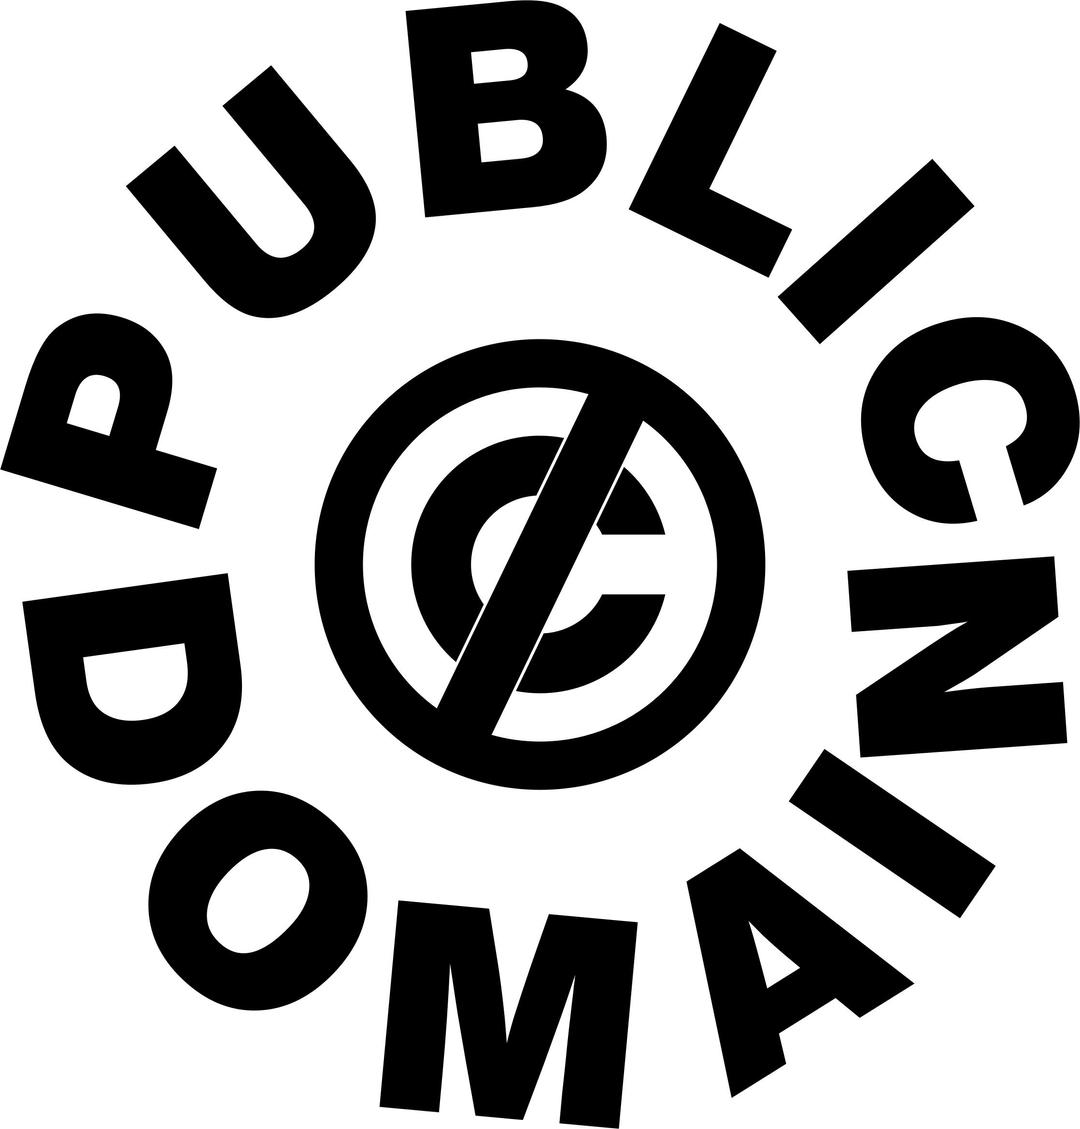 Public Domain Typography 2 png transparent